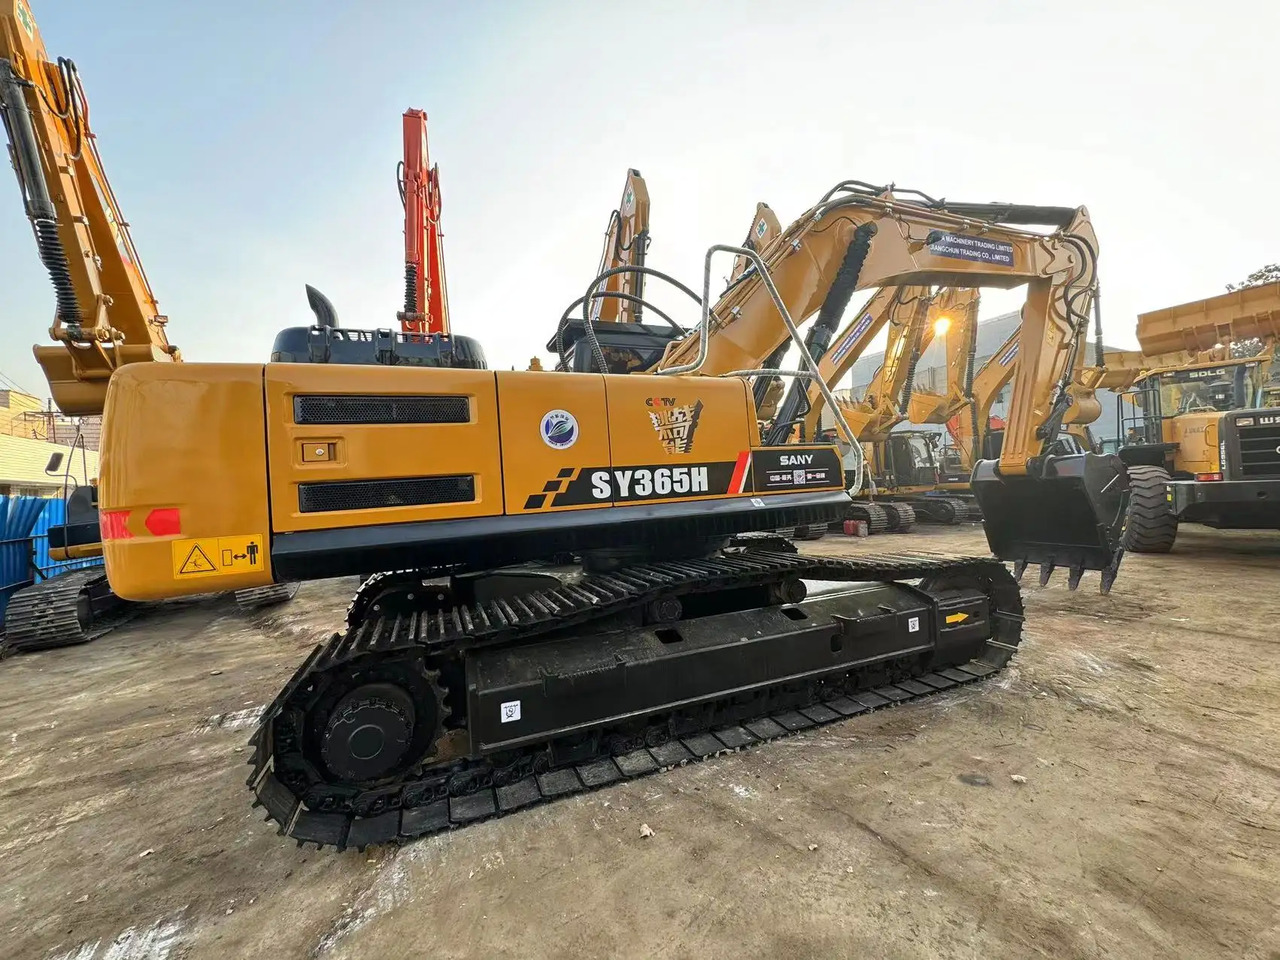 Escavadora de rastos Hot sale Used 36 ton Excavator Machinery China Brand Sany 365H  with powerful digger construction machinery: foto 4